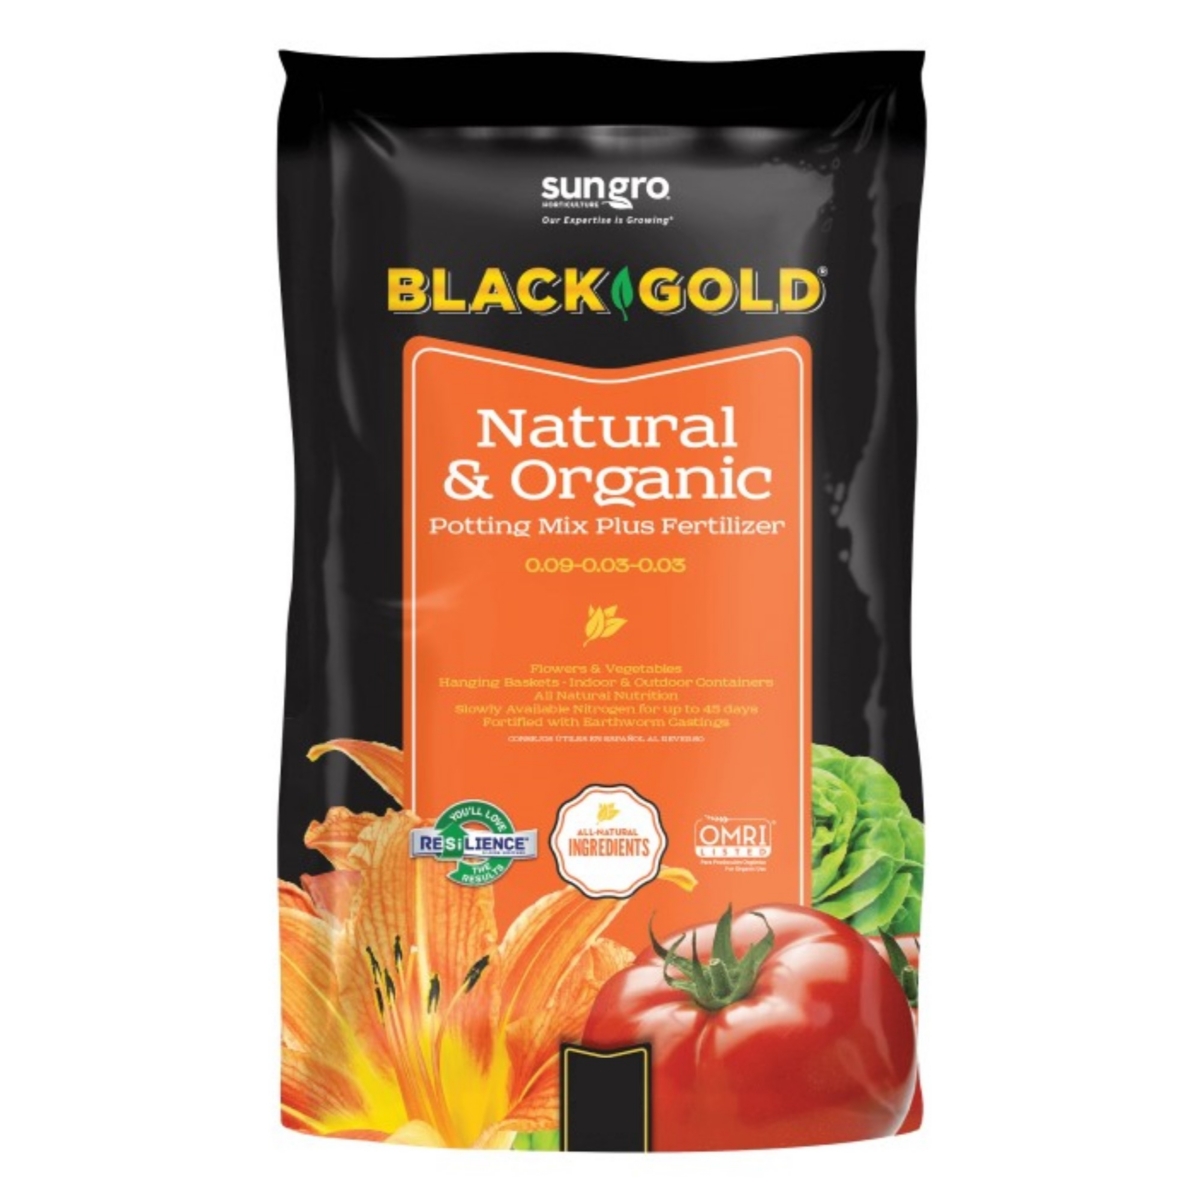 Sunjoy Sun Gro Black Gold Natural and Organic Soil Potting Soil, 2 Cubic Feet Bag (Pack of 1)